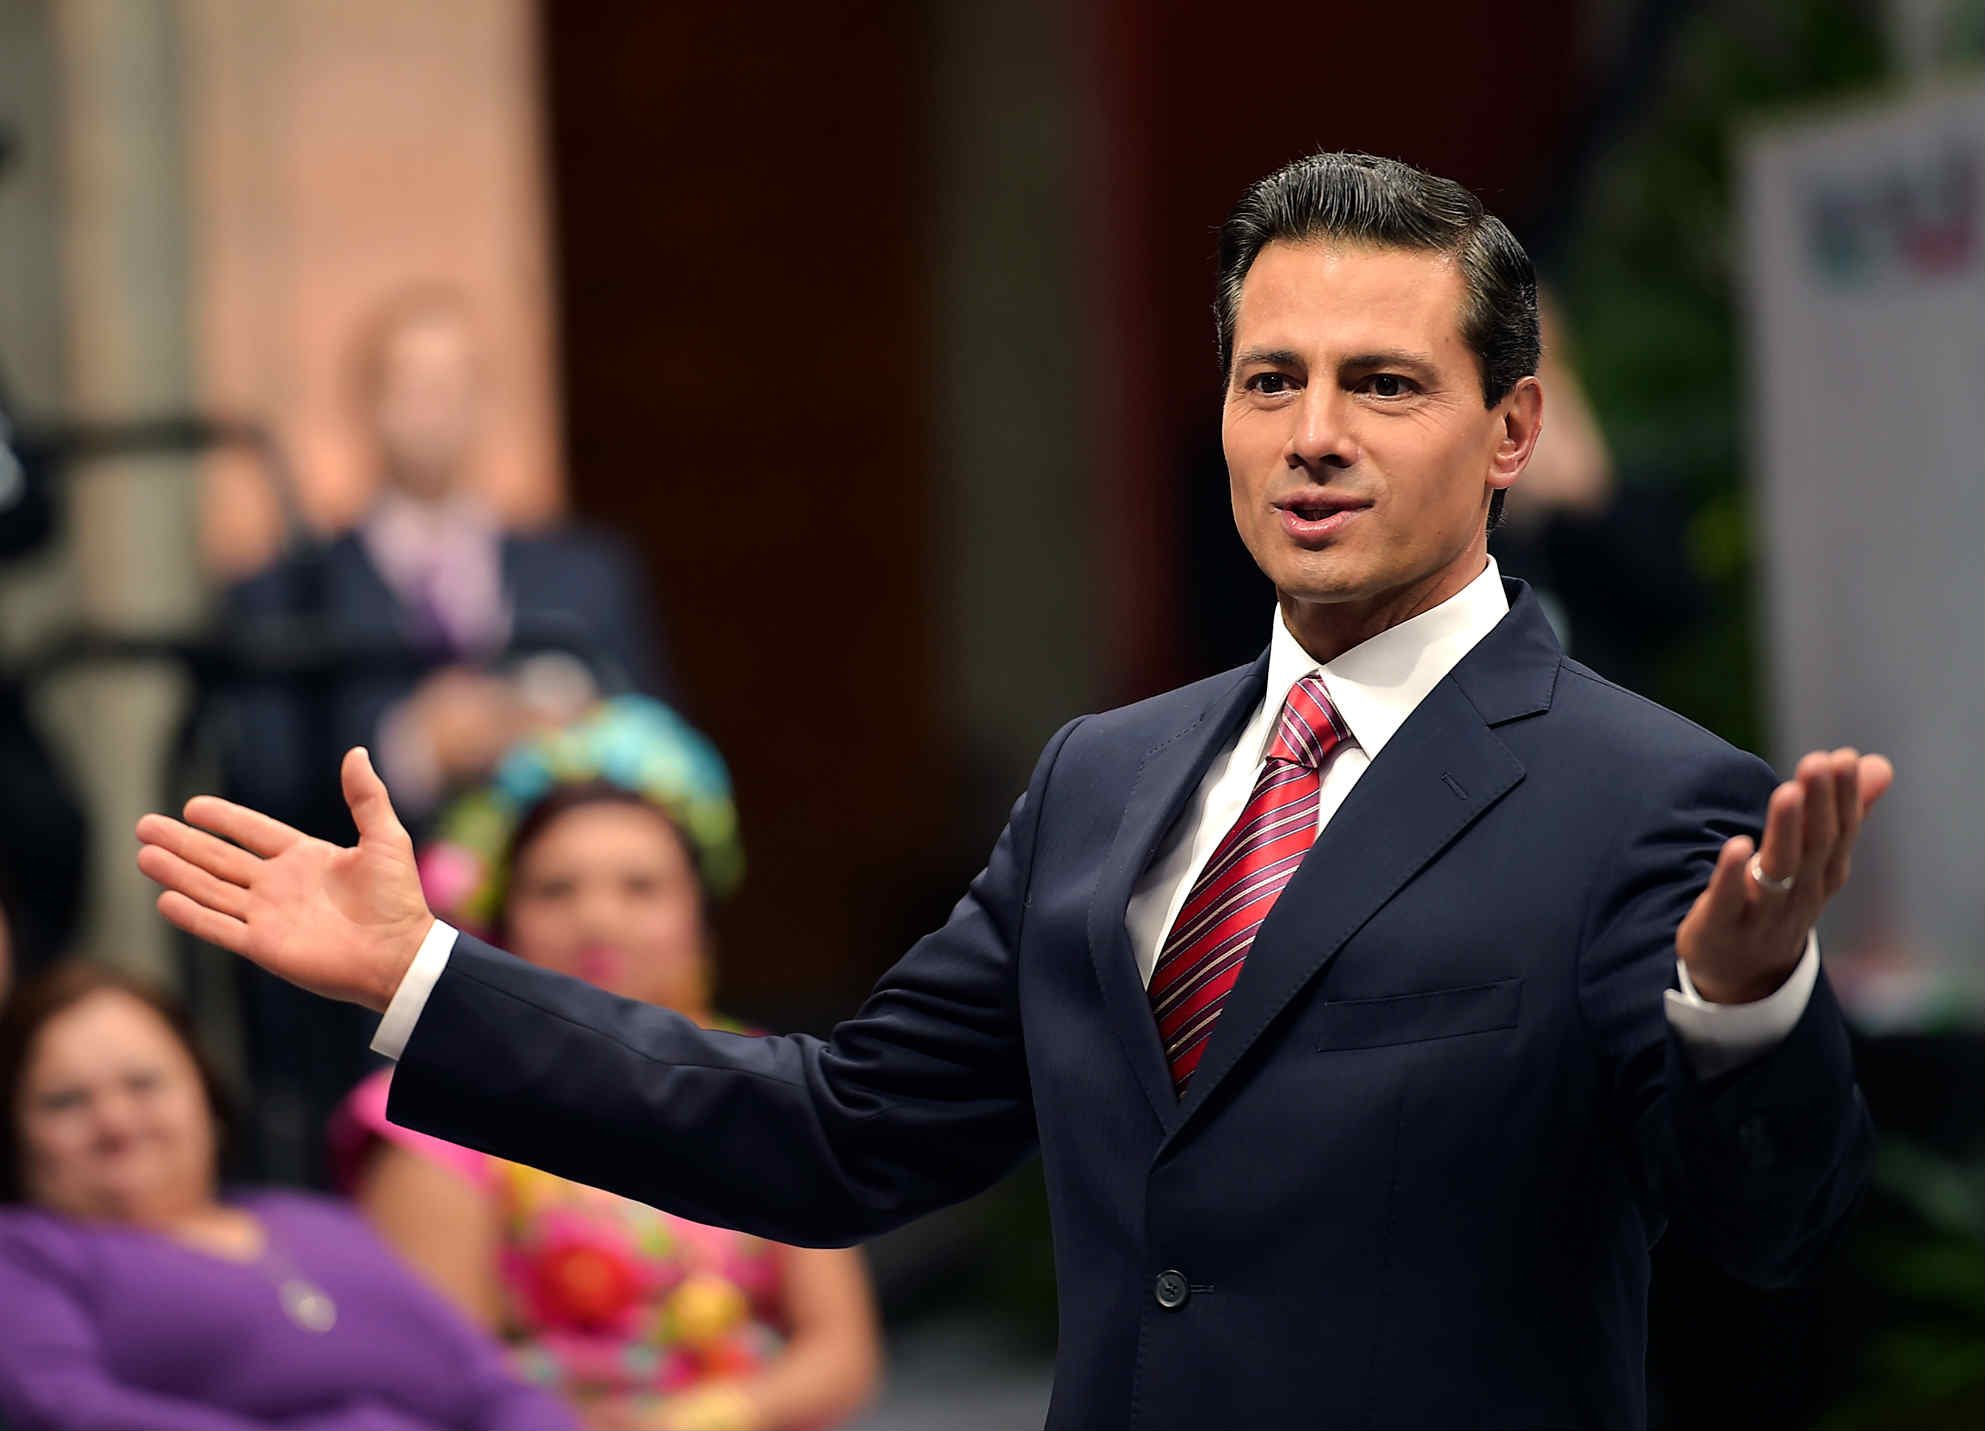 Tesis tuvo errores metodológicos, pero no plagio: Peña Nieto